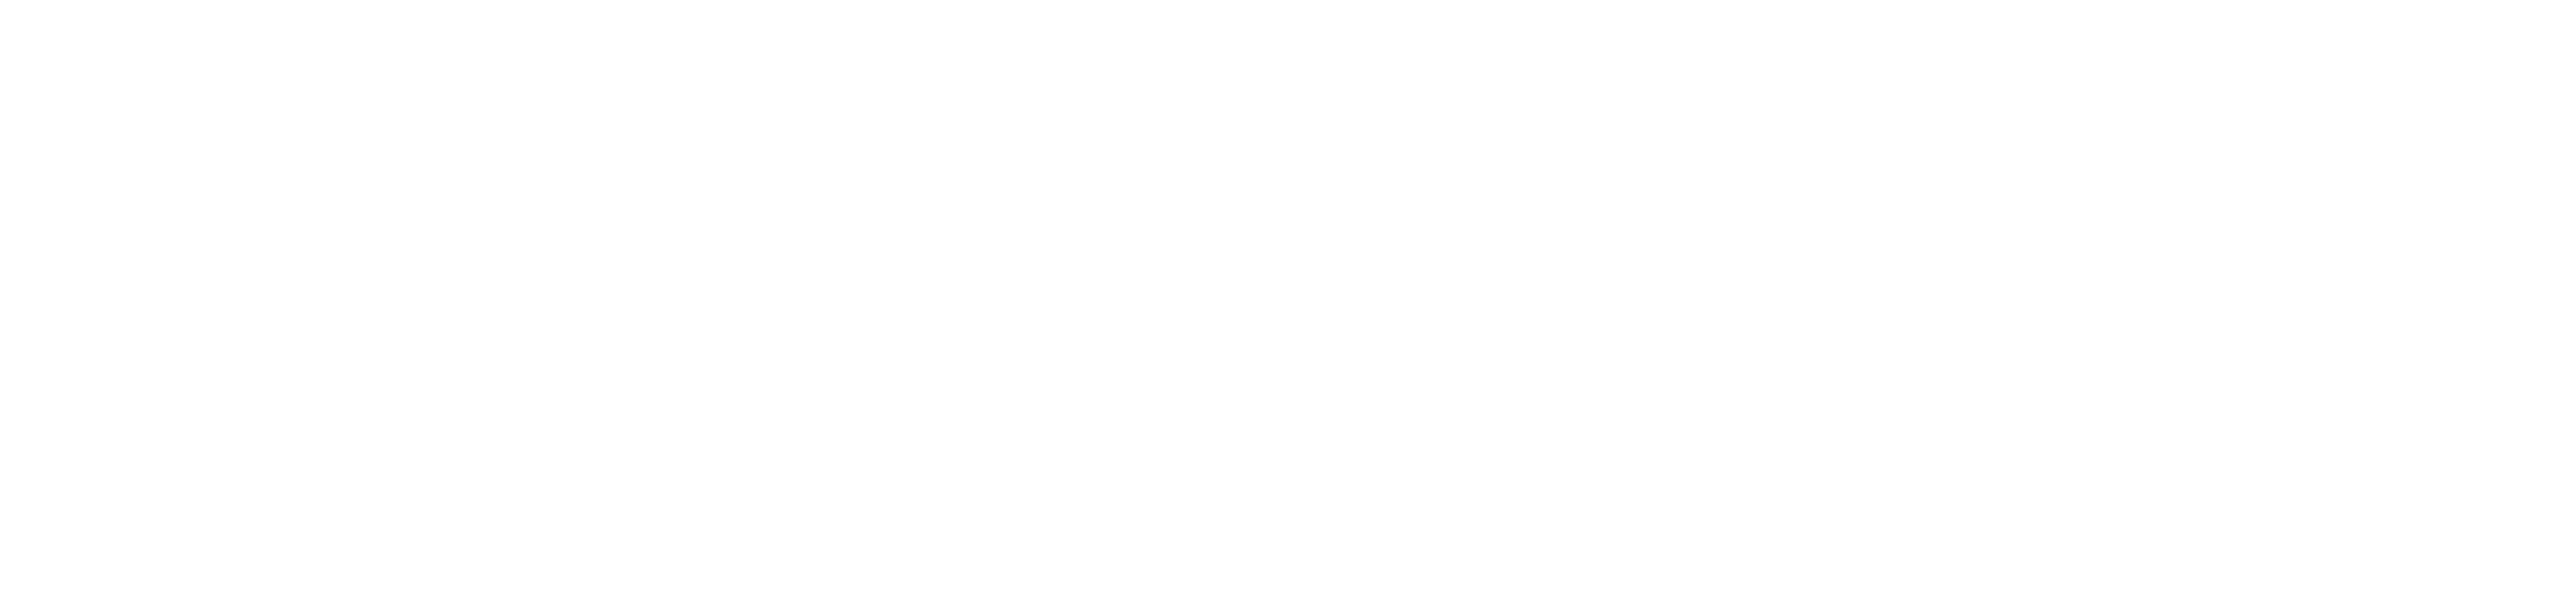 JSR LS White Horizontal Logo 2019OCT62019 (1)